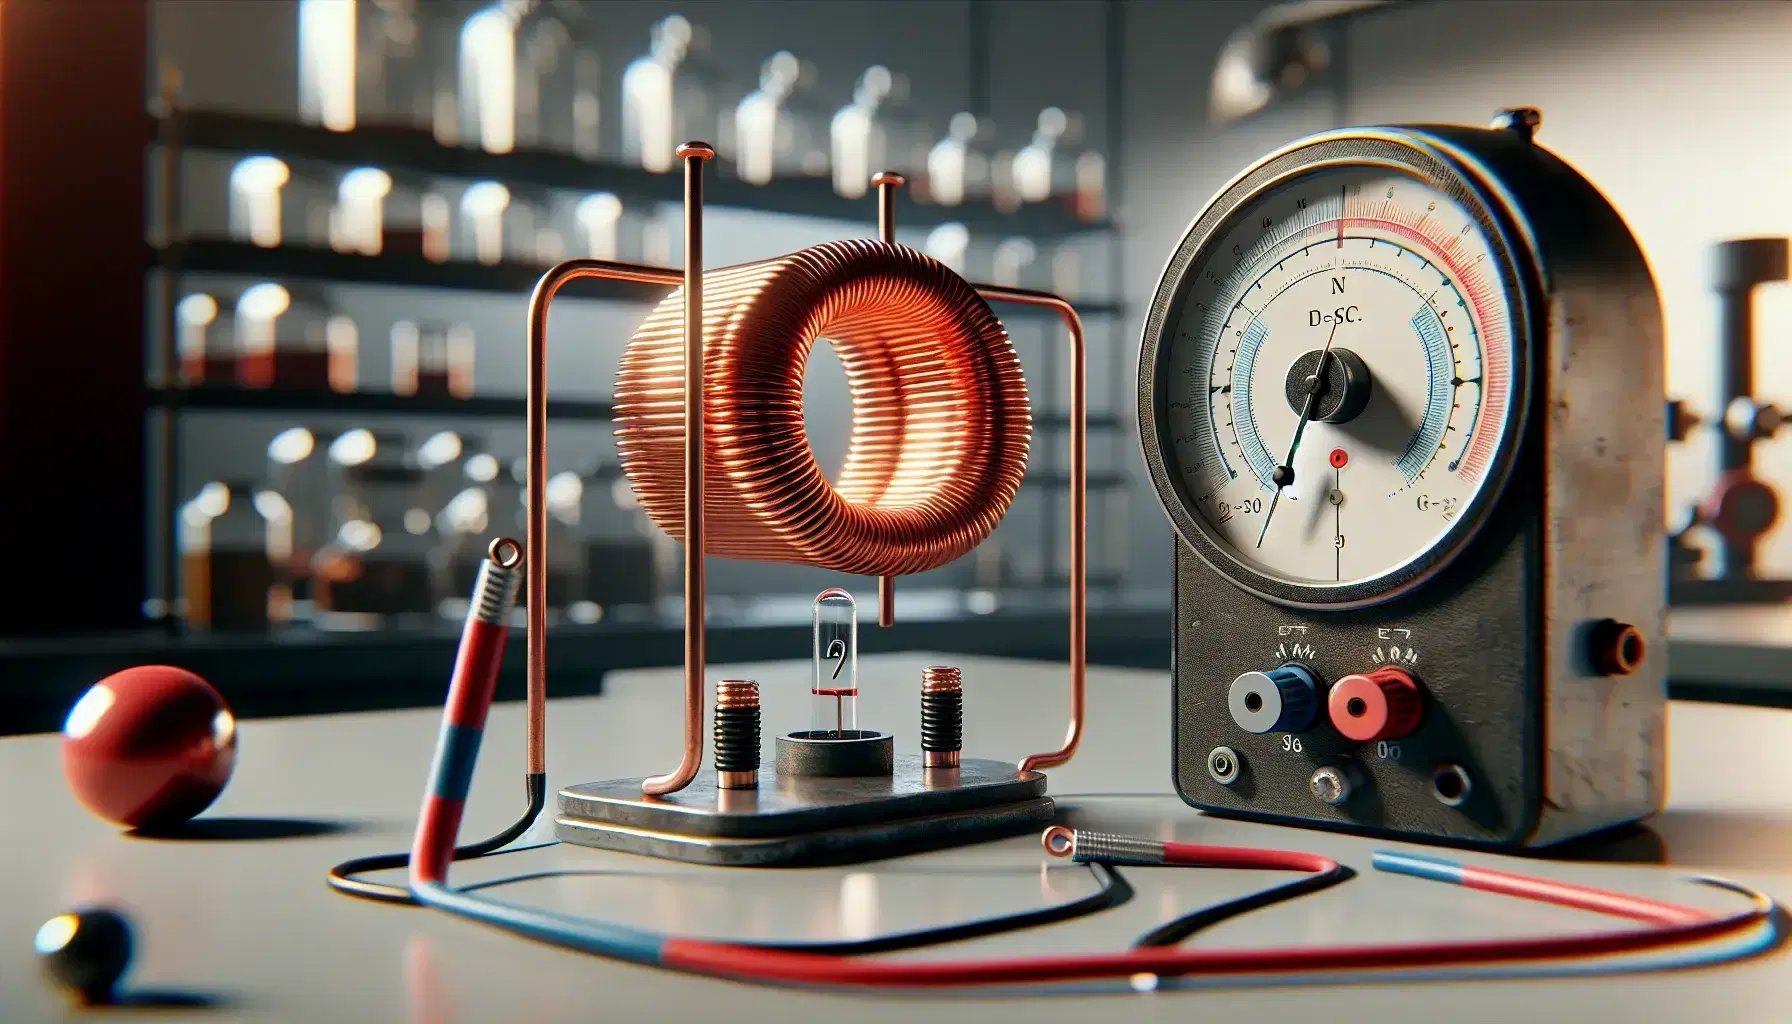 Experimento de laboratorio de física con bobina de cobre, imán de barra y galvanómetro conectado, mostrando inducción electromagnética.